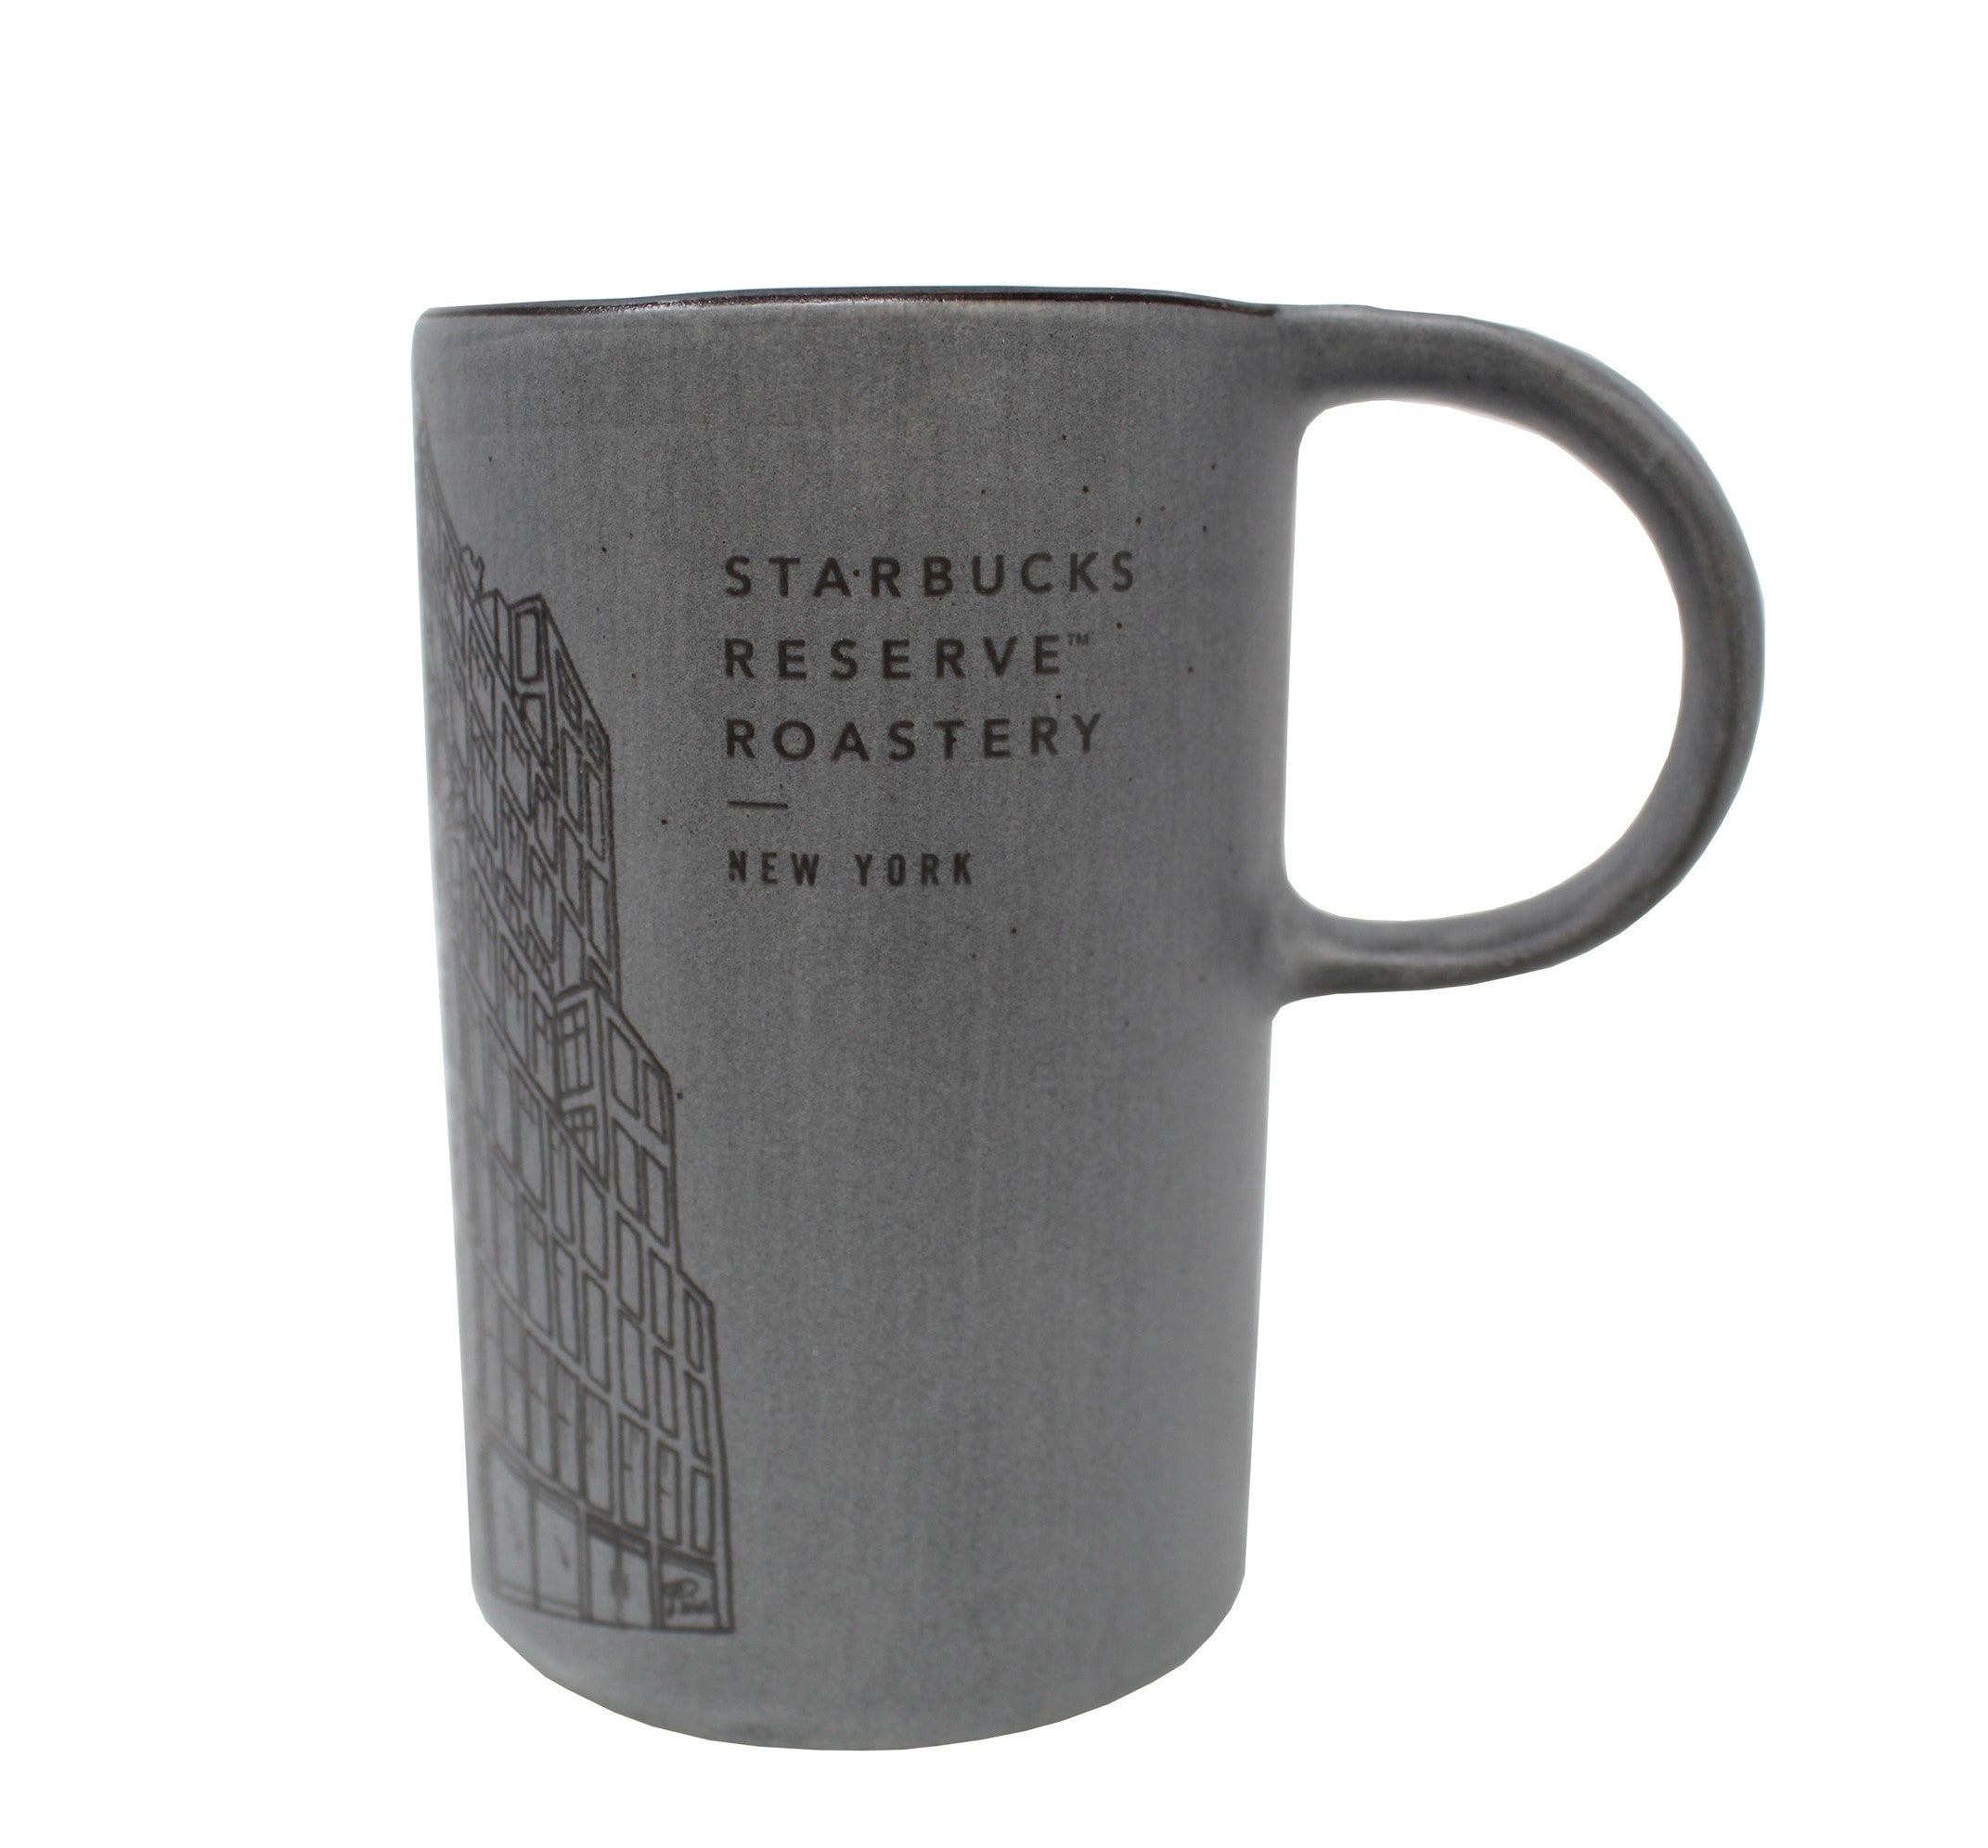 Starbucks Reserve Roastery New York Ceramic Mug Cement Grey, 10 Oz